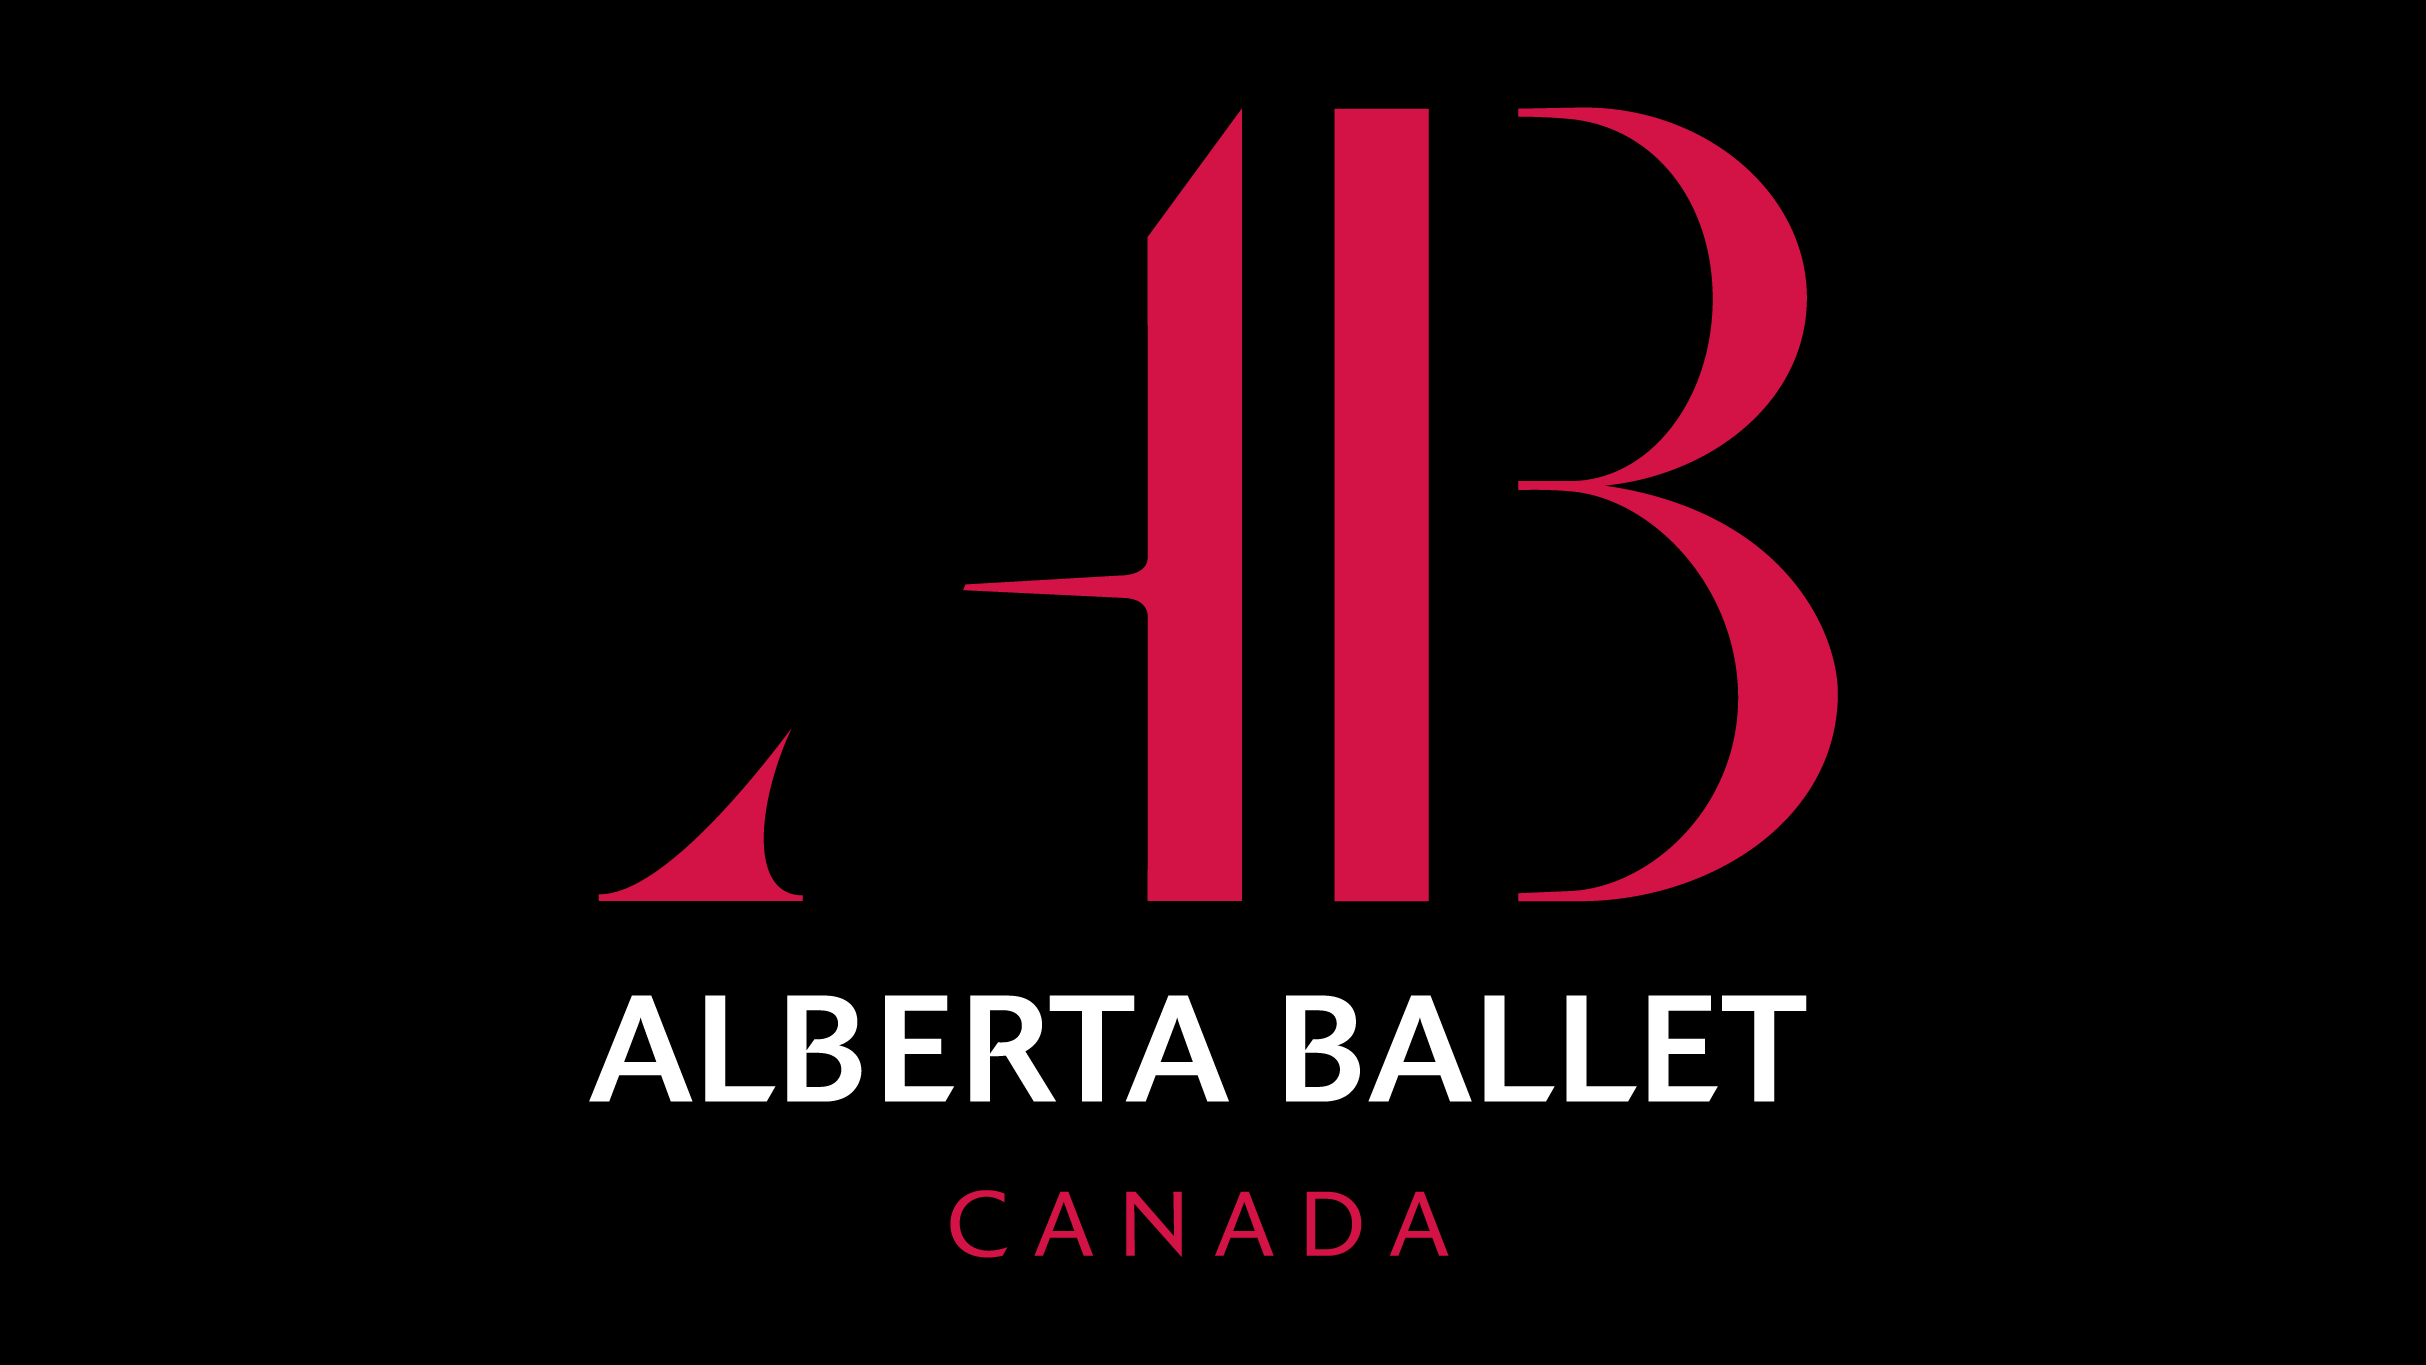 Alberta Ballet in The Nutcracker